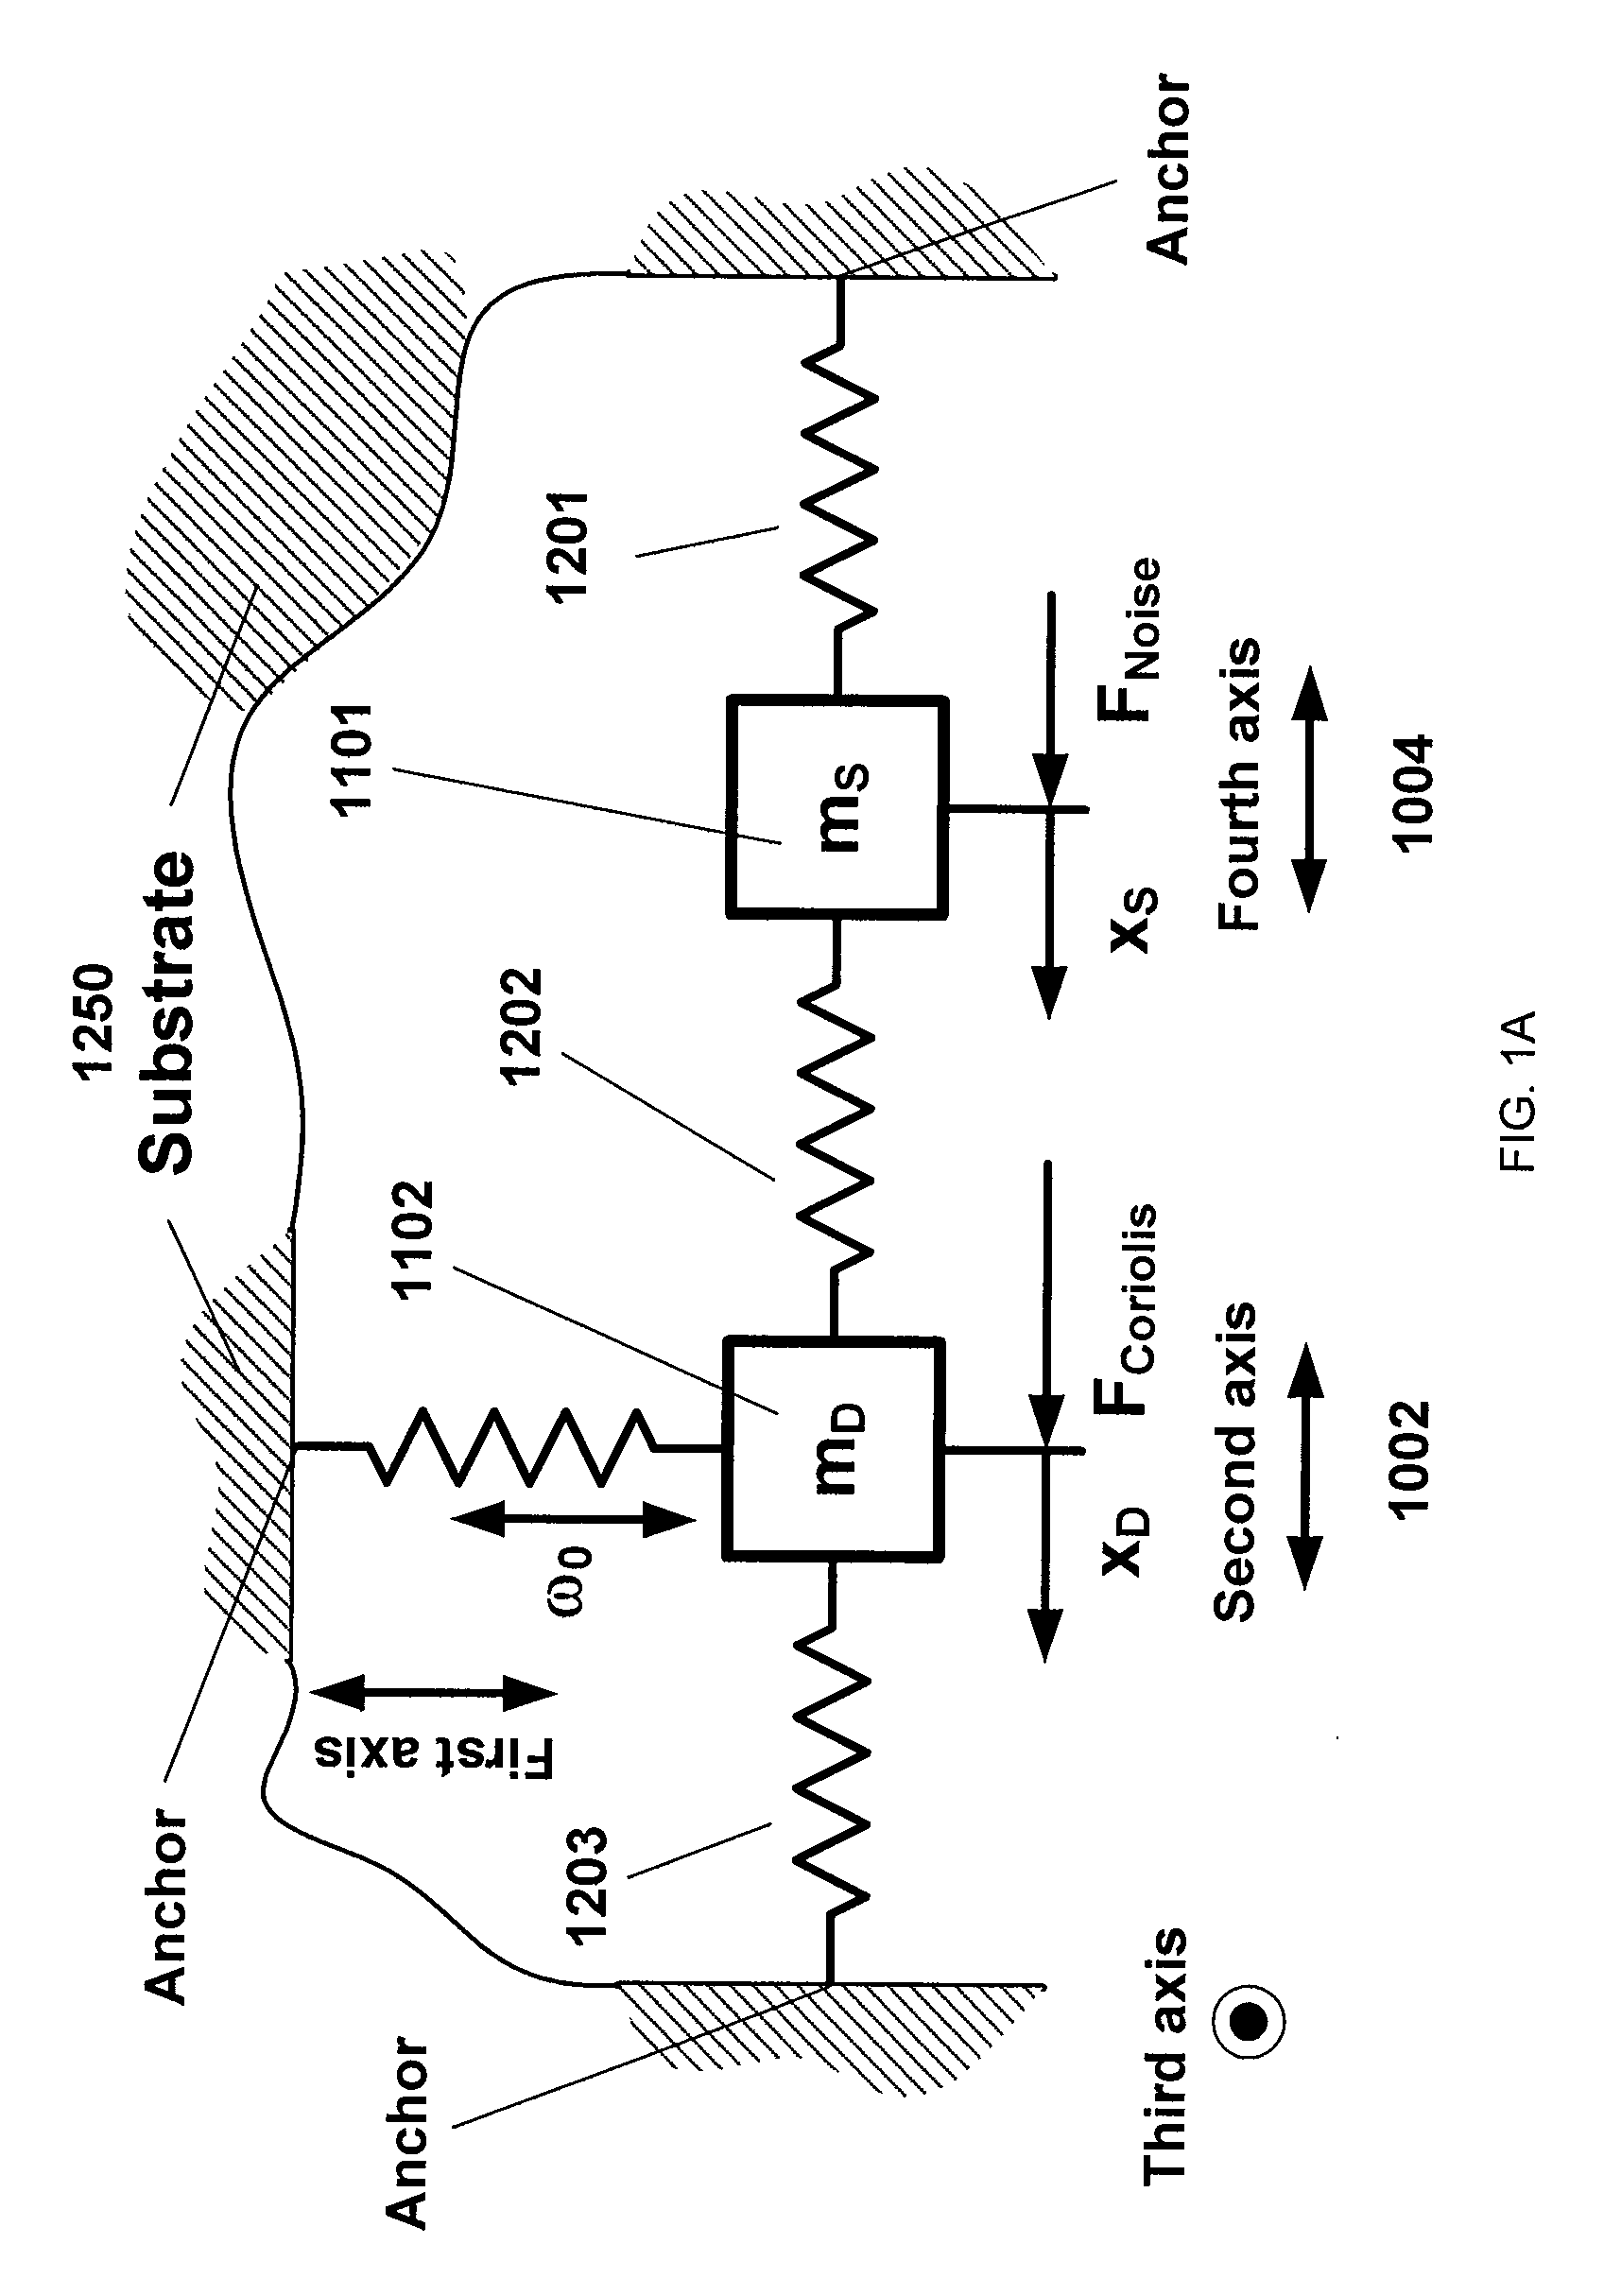 Dual mode sensing for vibratory gyroscope